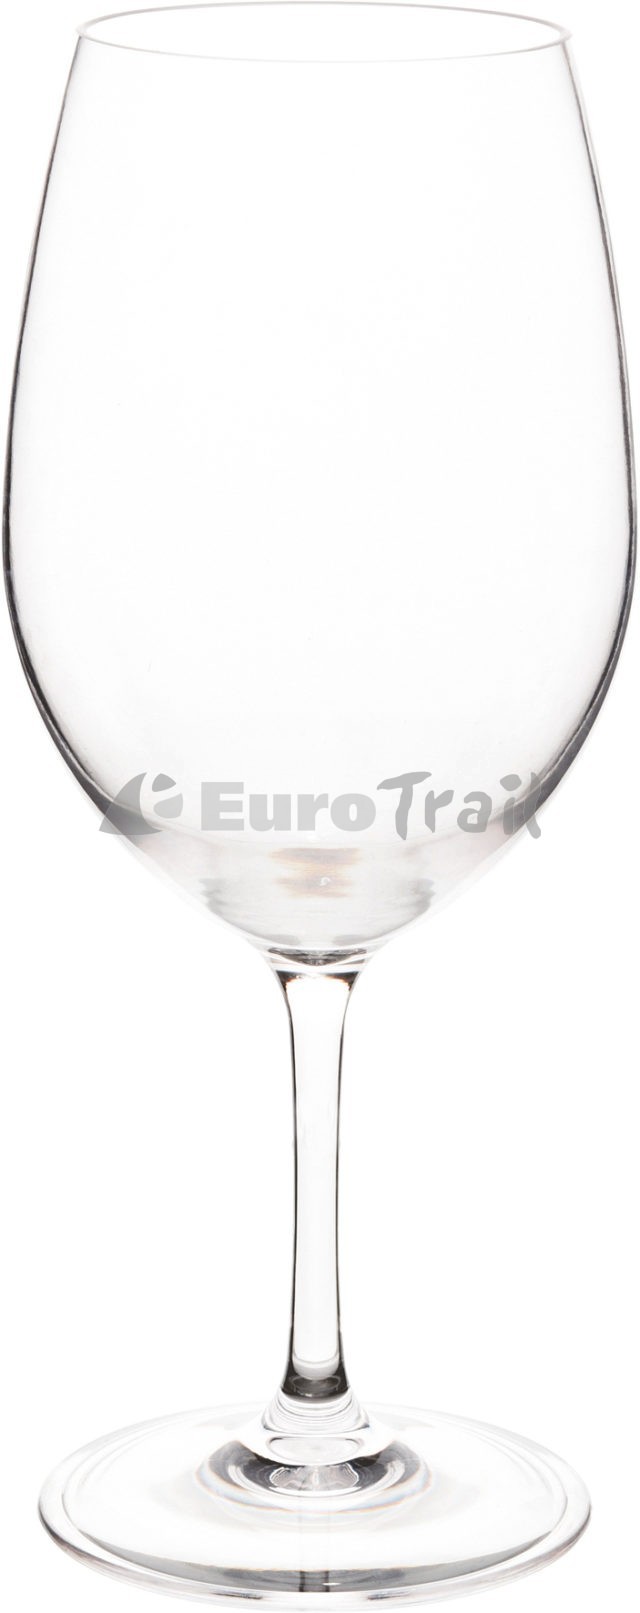 Eurotrail wine glass large